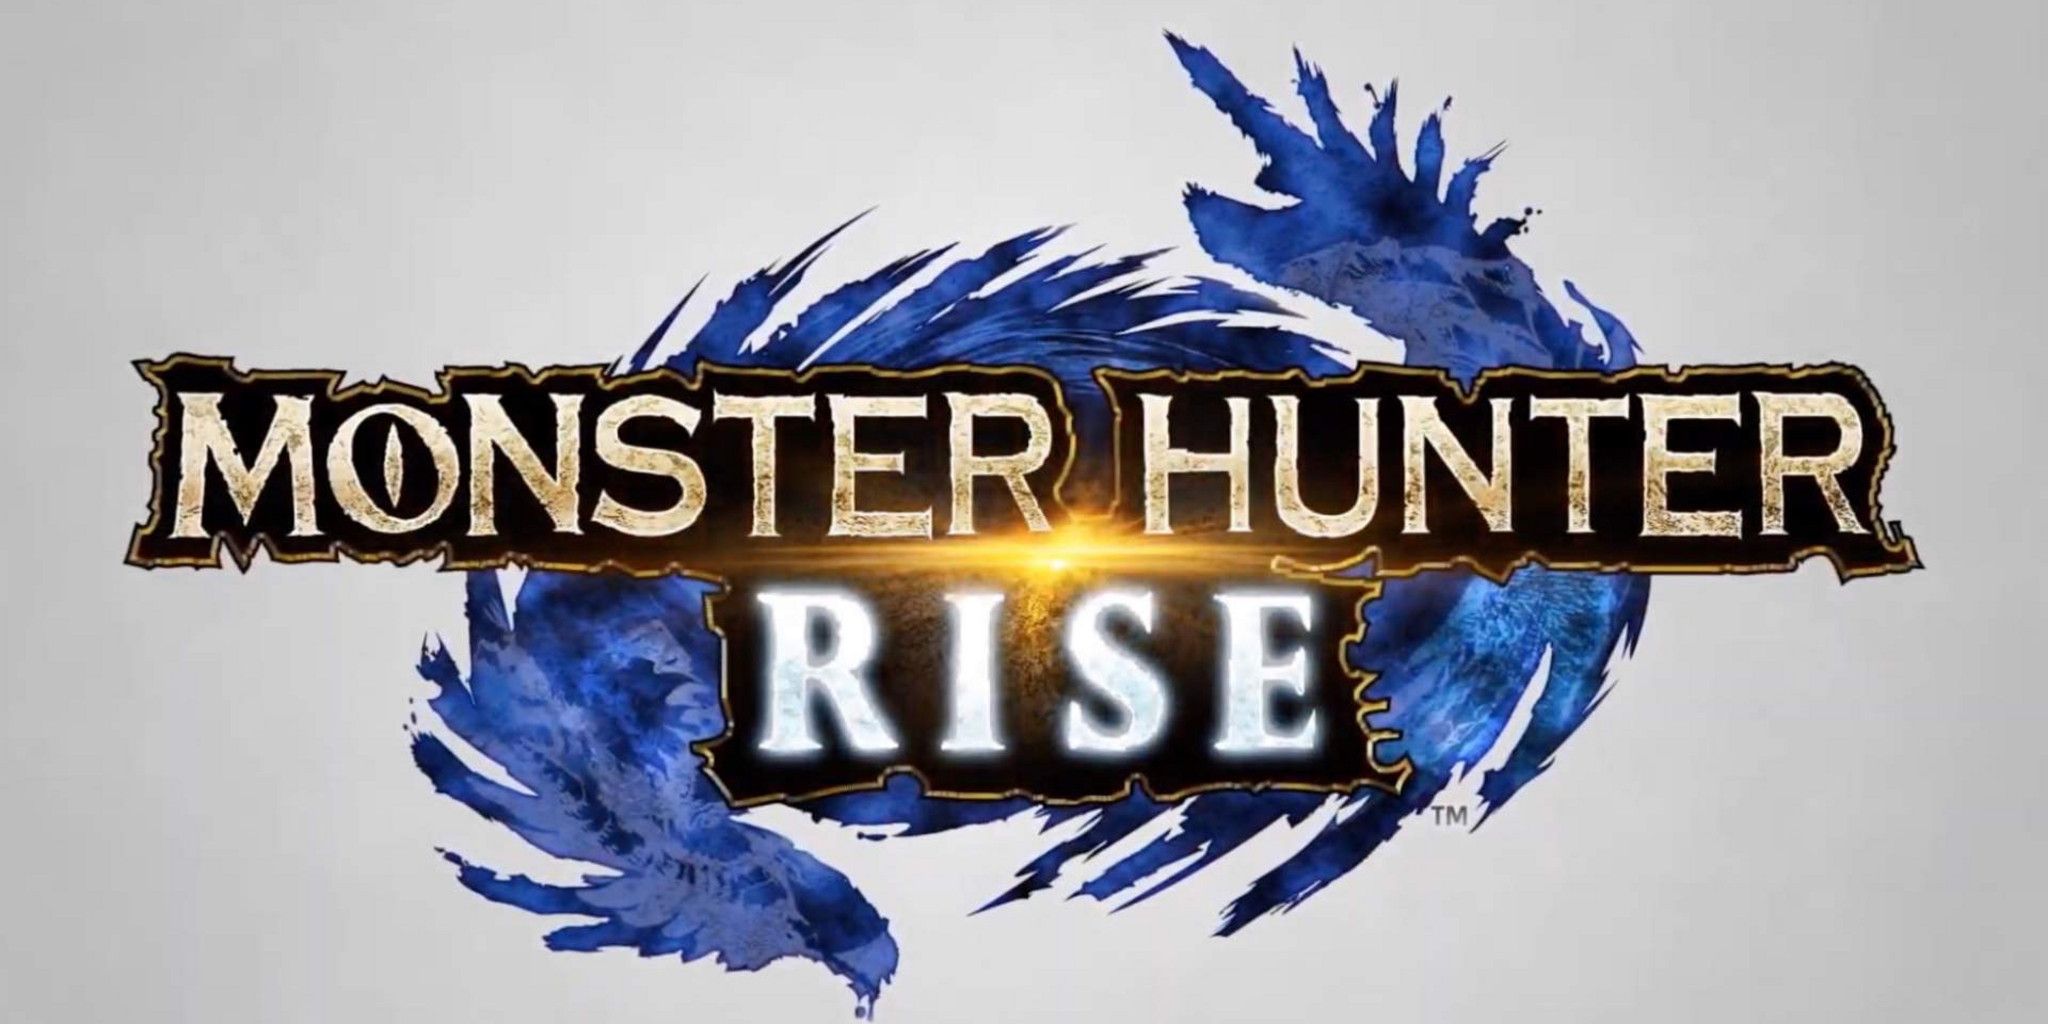 Monster Hunter Rise wallpaper. Britgamer. The most detailed games database online